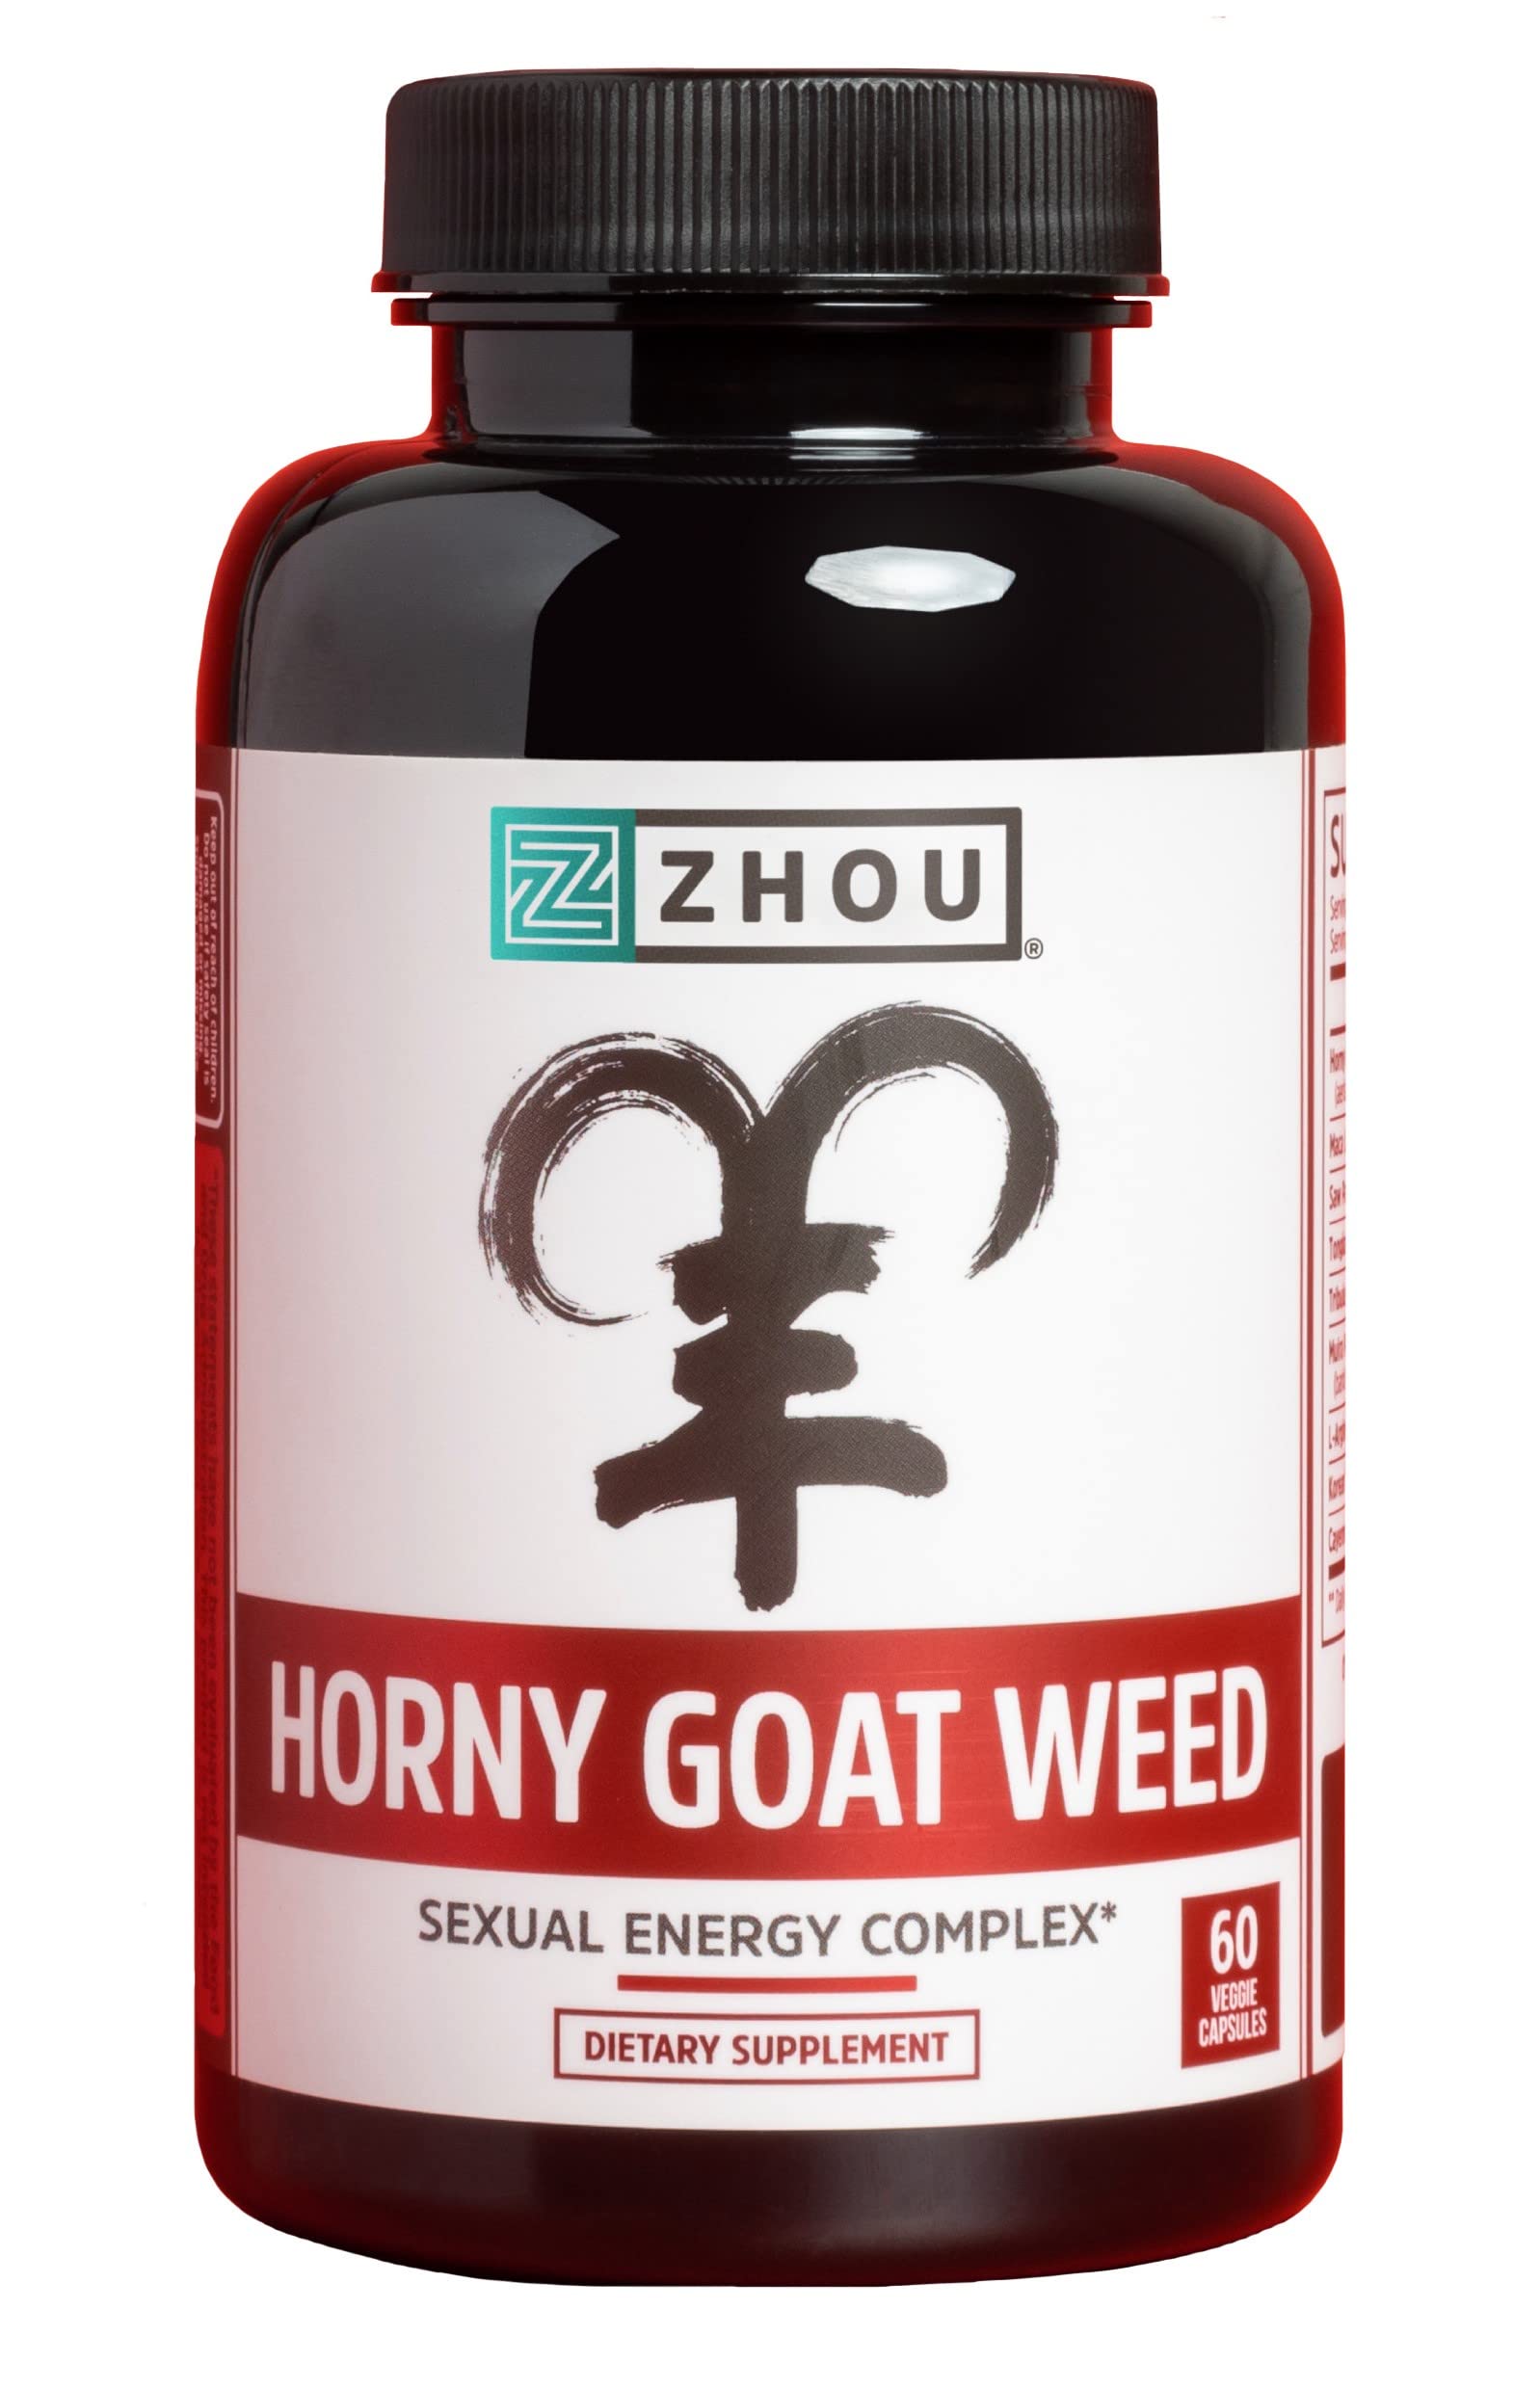 Zhou Premium Horny Goat Weed Extract with Maca & Tribulus | Enhanced Energy Complex for Men & Women | 30 Servings, 60 Veggie Capsules